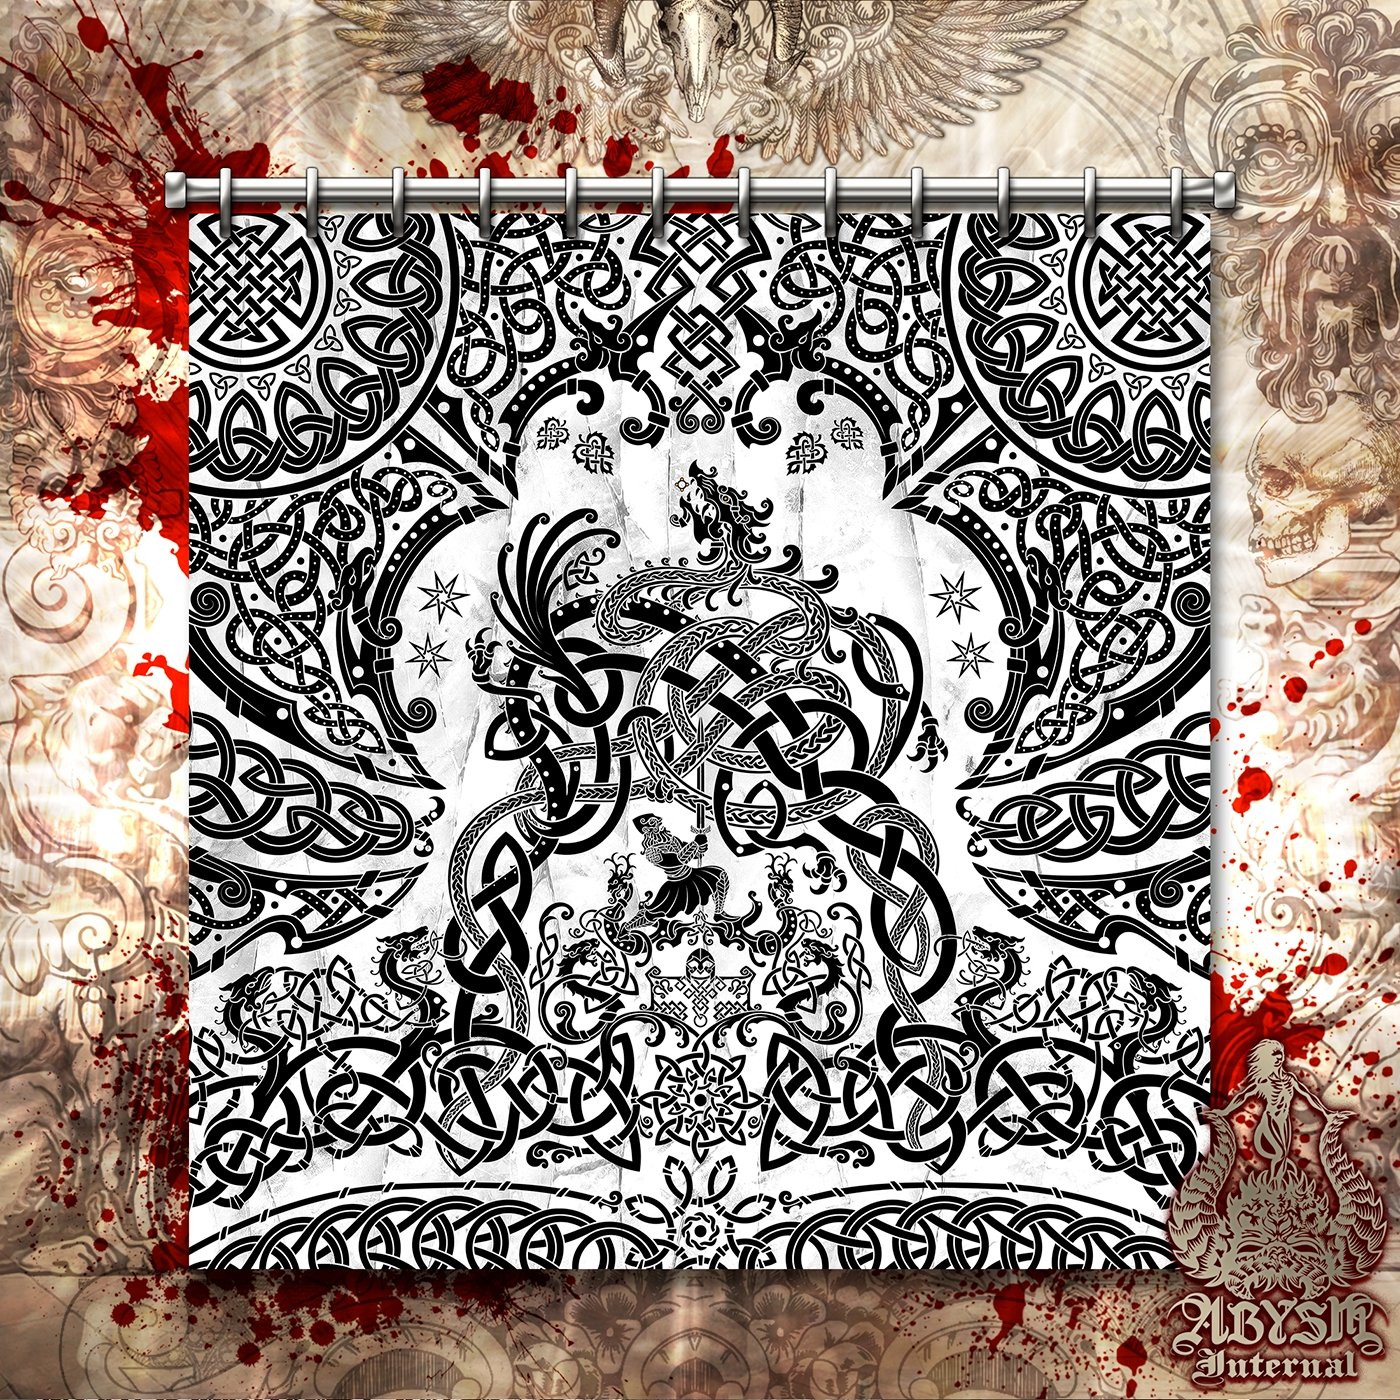 Viking Shower Curtain, Bathroom Decor, Nordic & Norse Art, Dragon Fafnir - Black & White - Abysm Internal